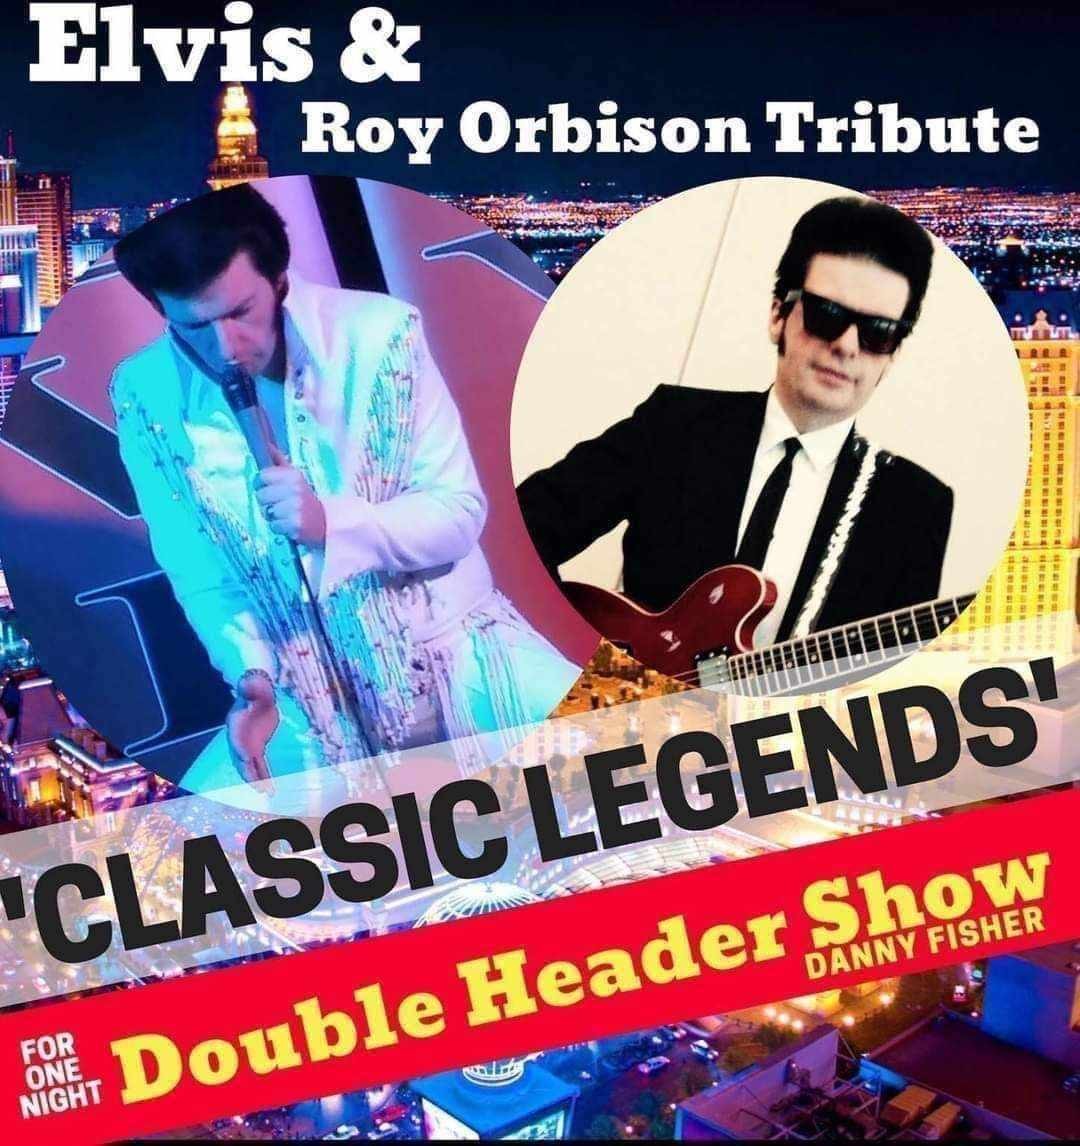 Elvis and Roy Orbison Double Header  on may. 18, 19:30@The George Alcock Centre - Compra entradas y obtén información enwhittlesey music nights 